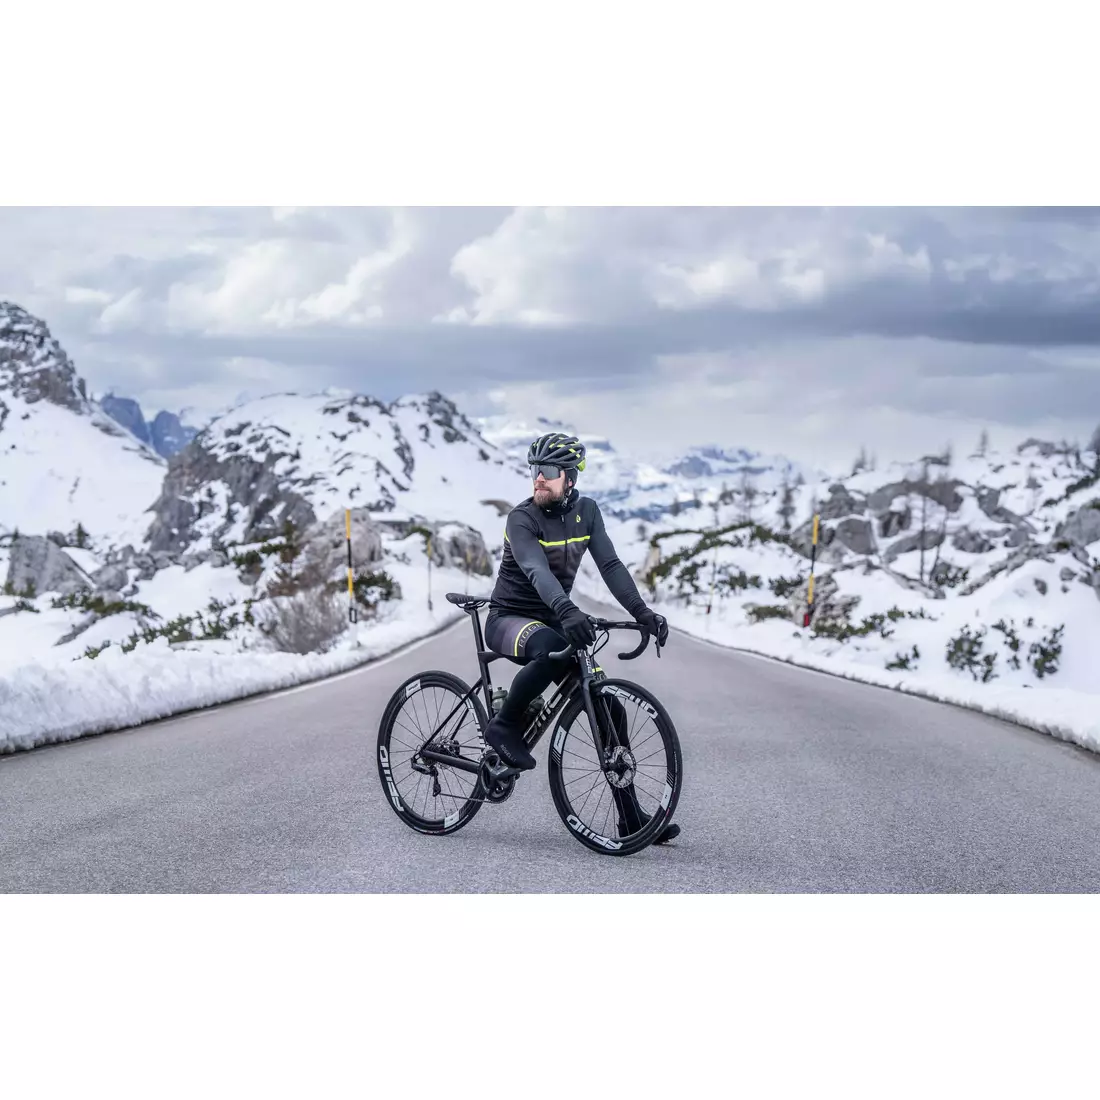 Rogelli zimní cyklistická bunda HERO II černo-fluor